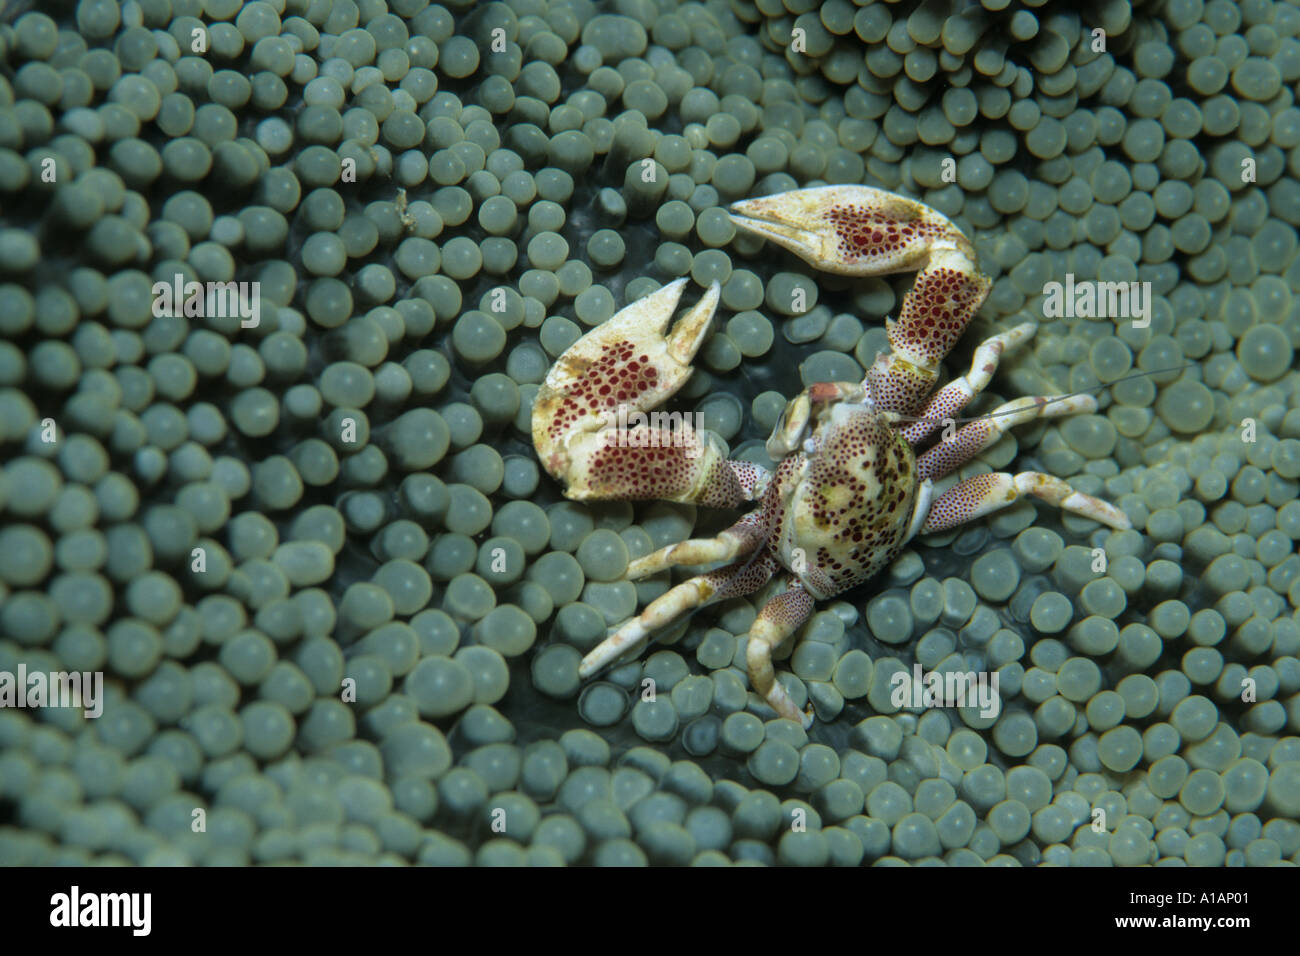 Anemone crab Neopetrolisthes ohshimai in Kimbe Bay New Britian Papua New Guinea Bismark Sea Pacific Ocean Stock Photo